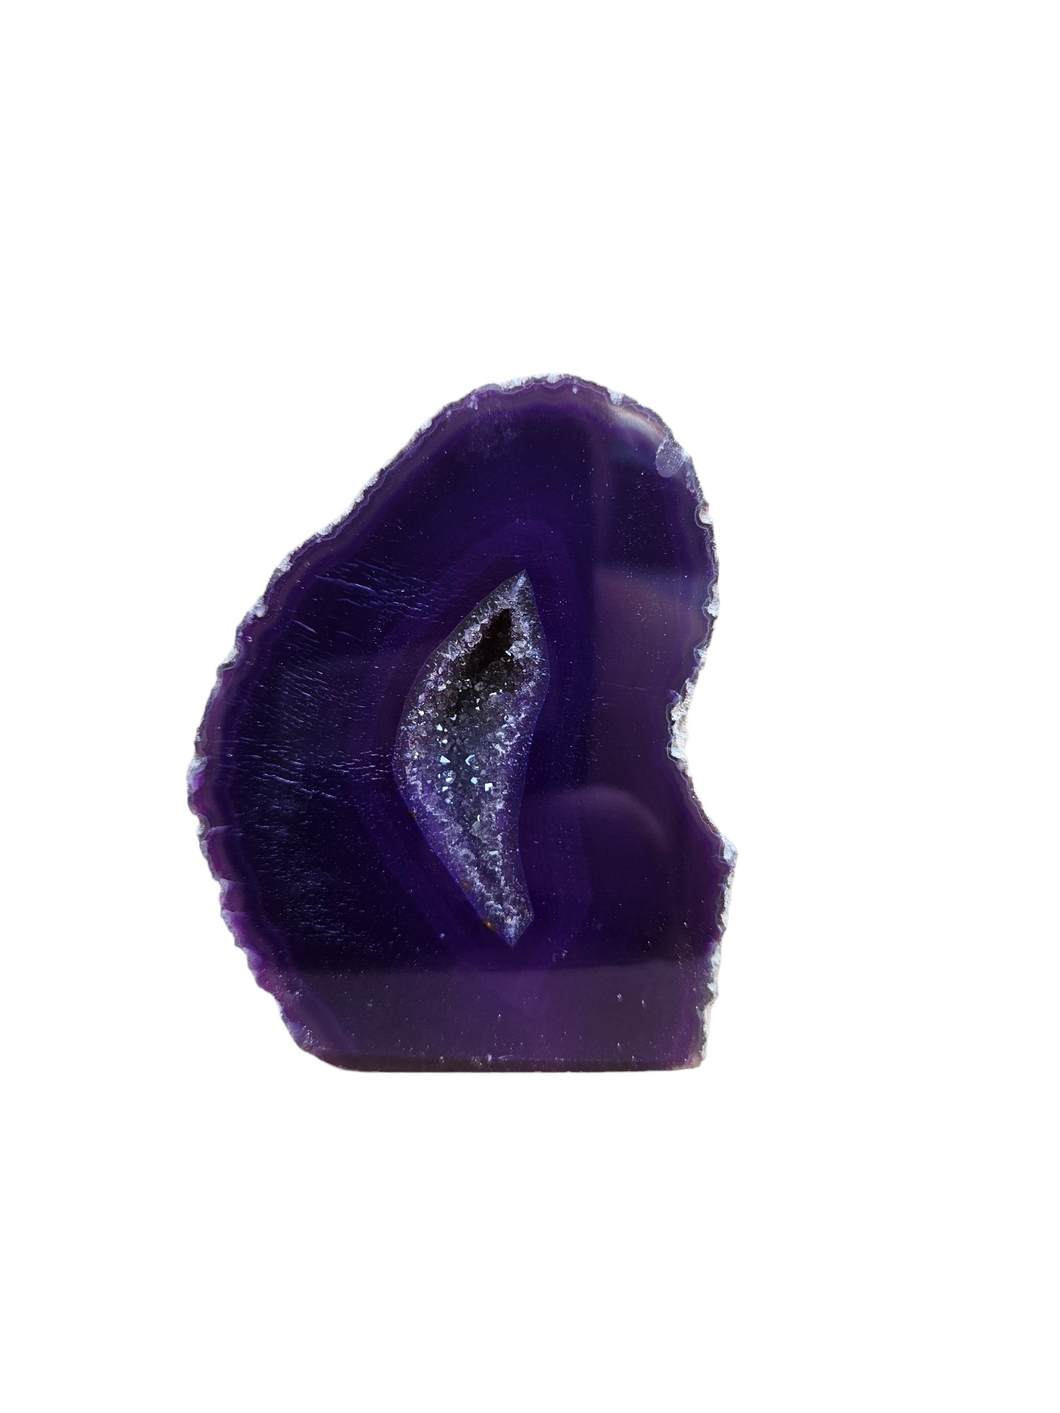 Agate Cut Base - Purple